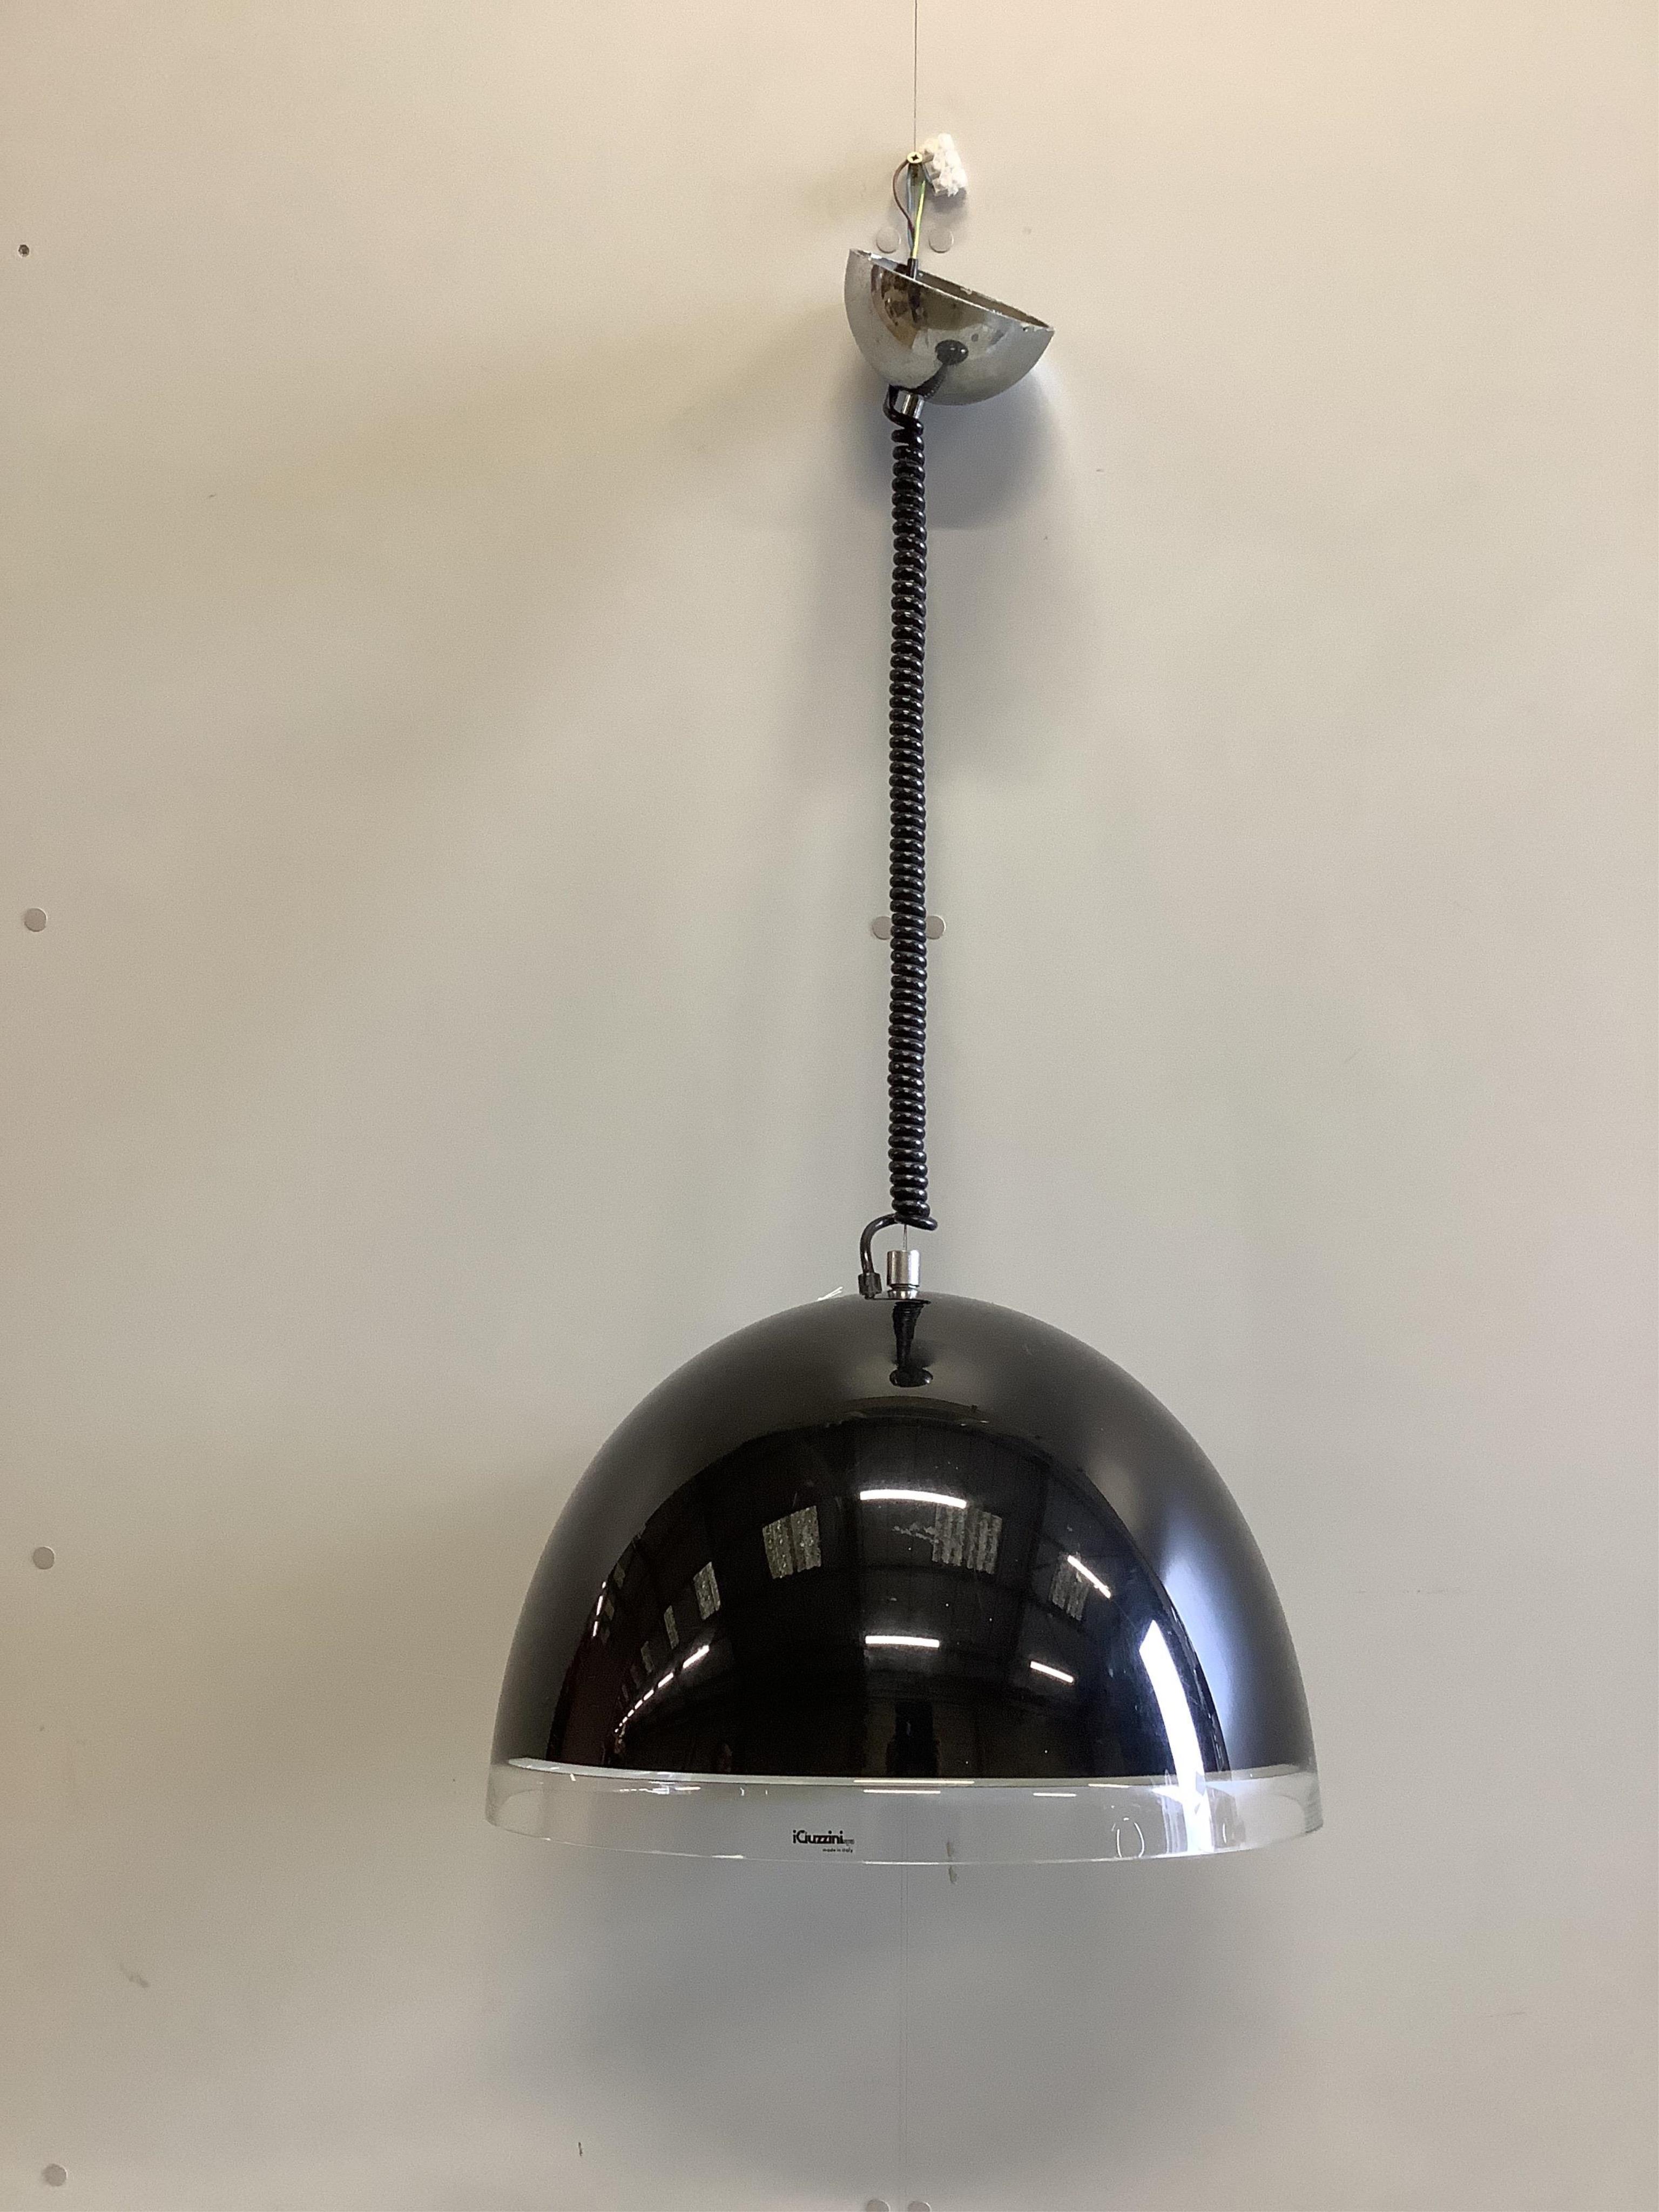 A perspex ceiling lamp by Guzzini, diameter 45cm, height 27cm